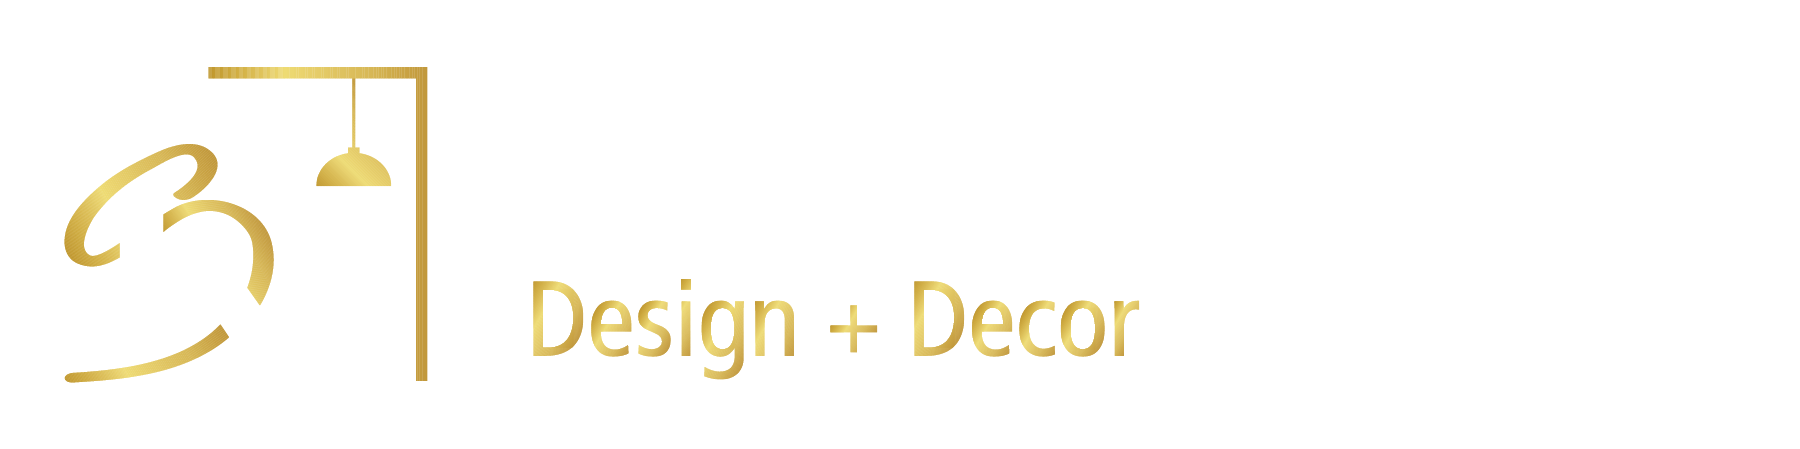 Raymond Scott Design + Decor